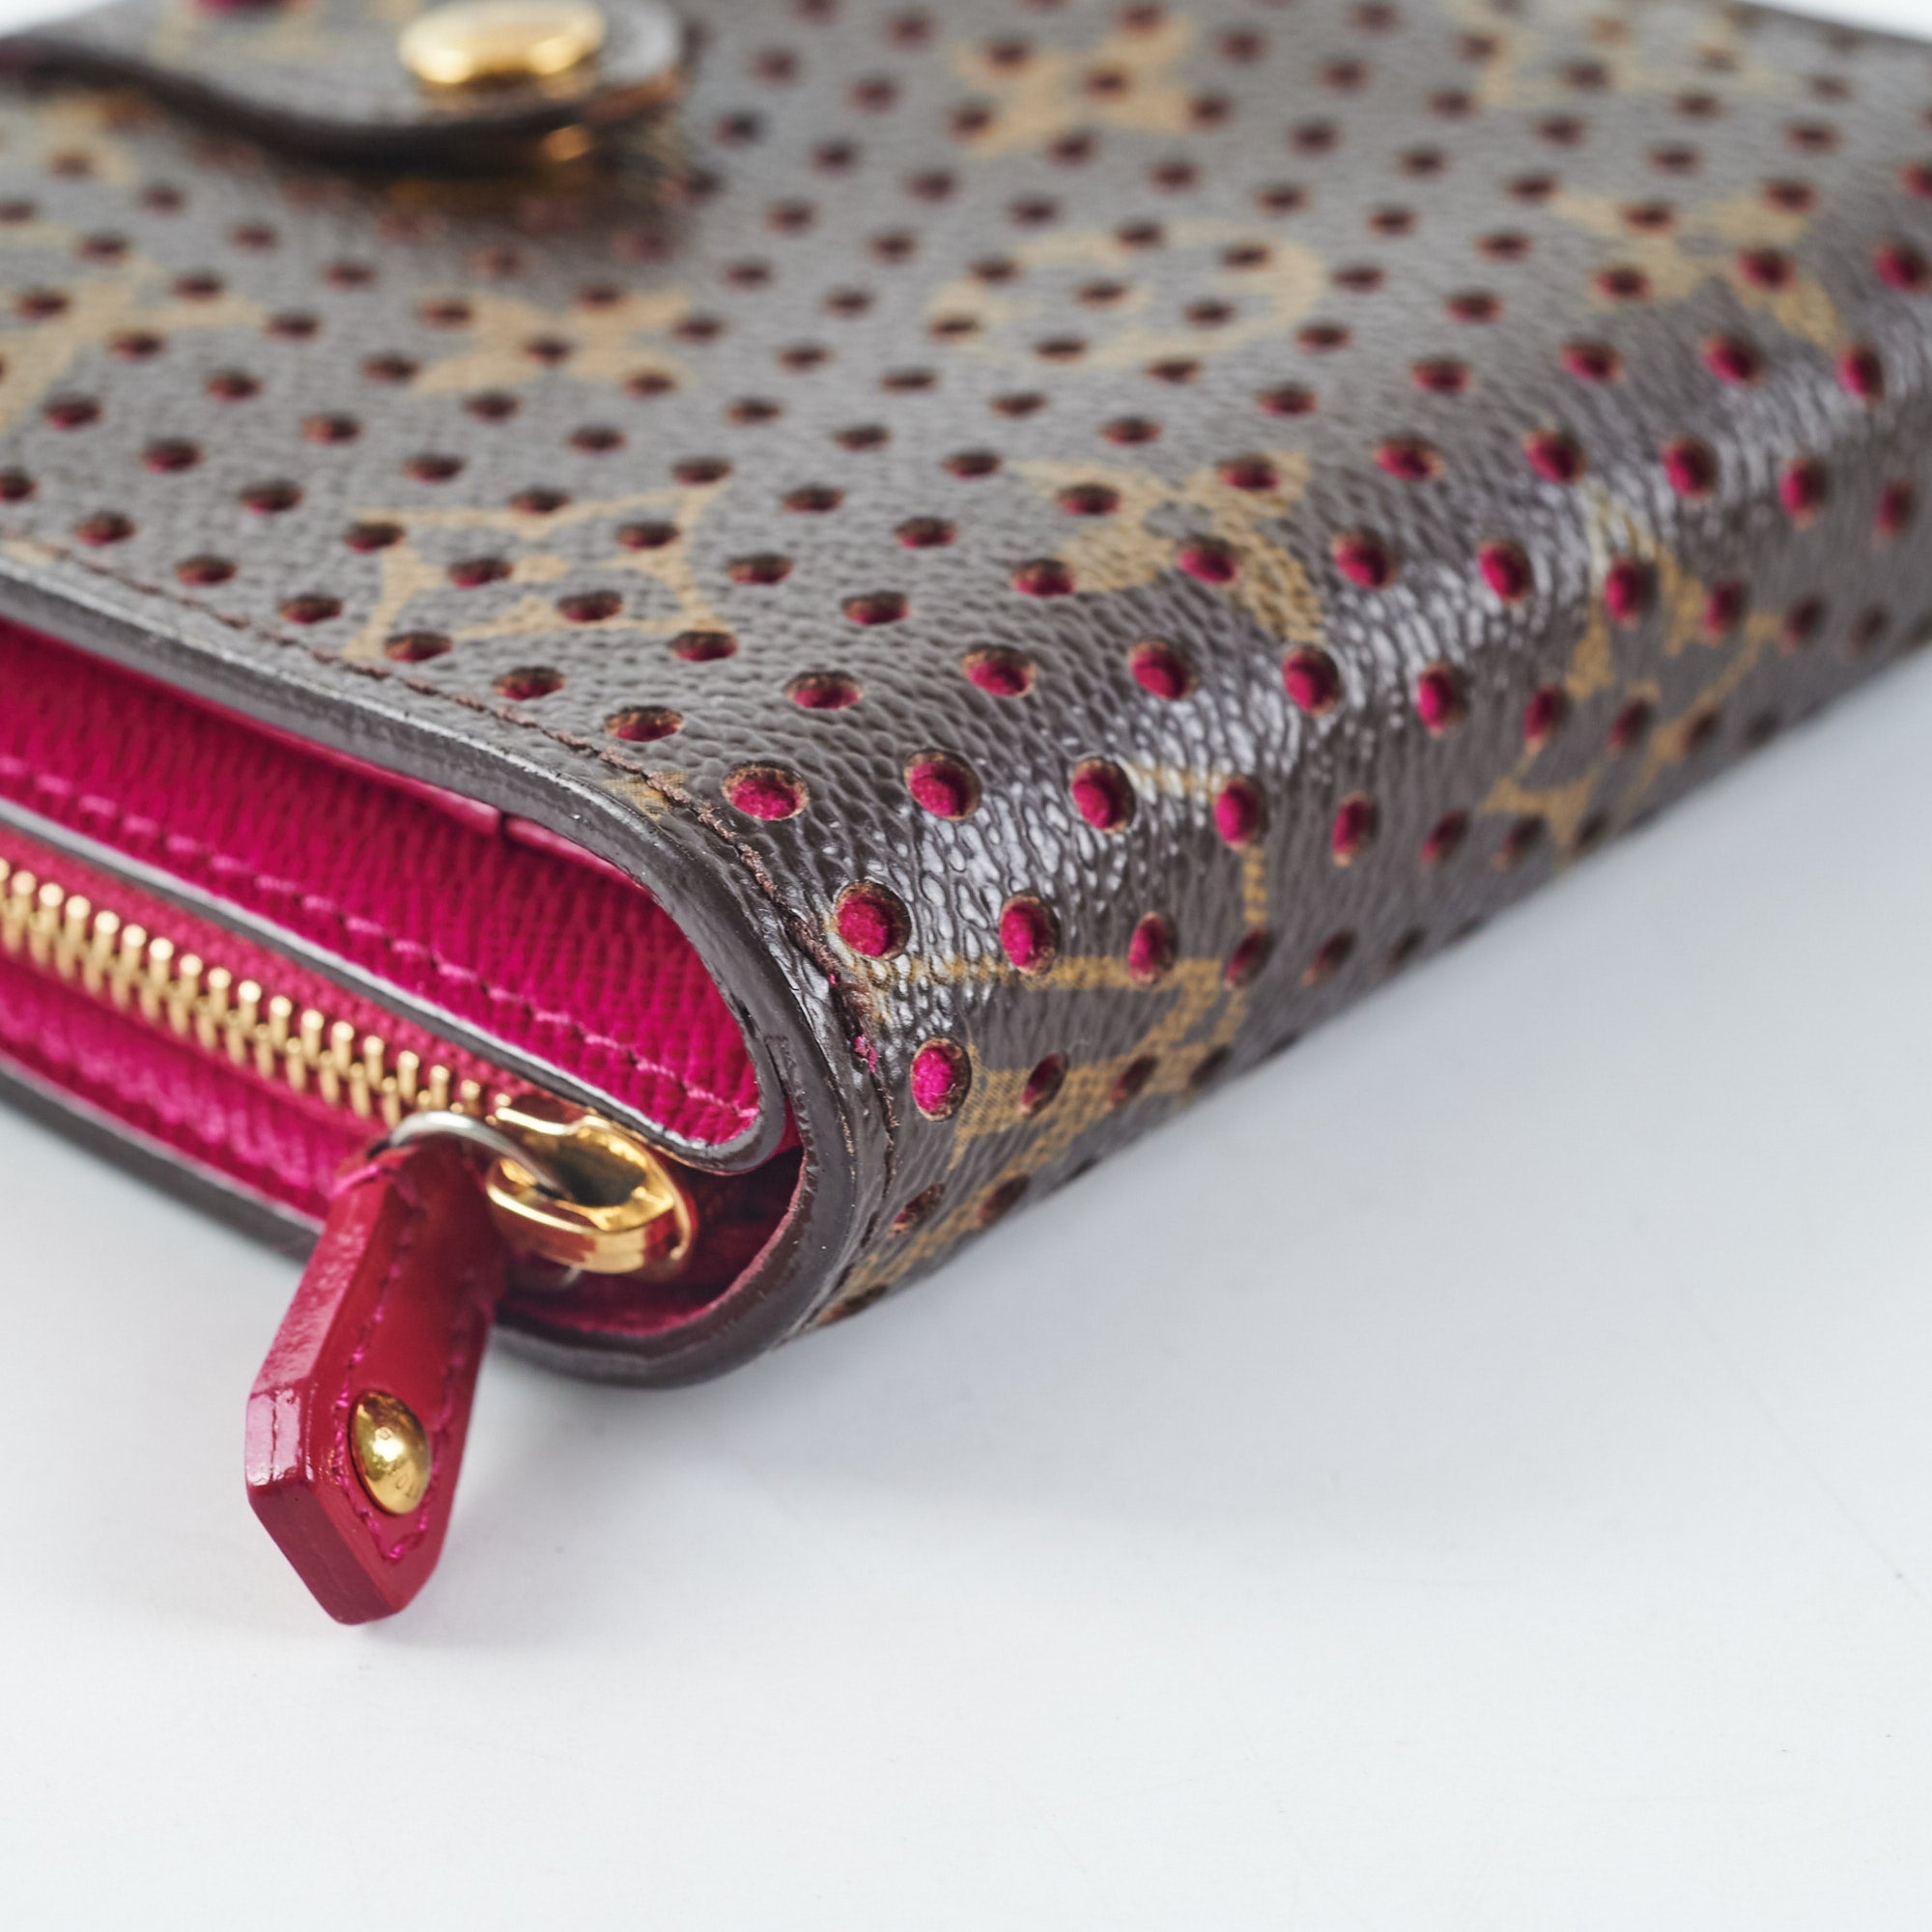 Louis Vuitton, Bags, Louis Vuitton Perforated Wallet